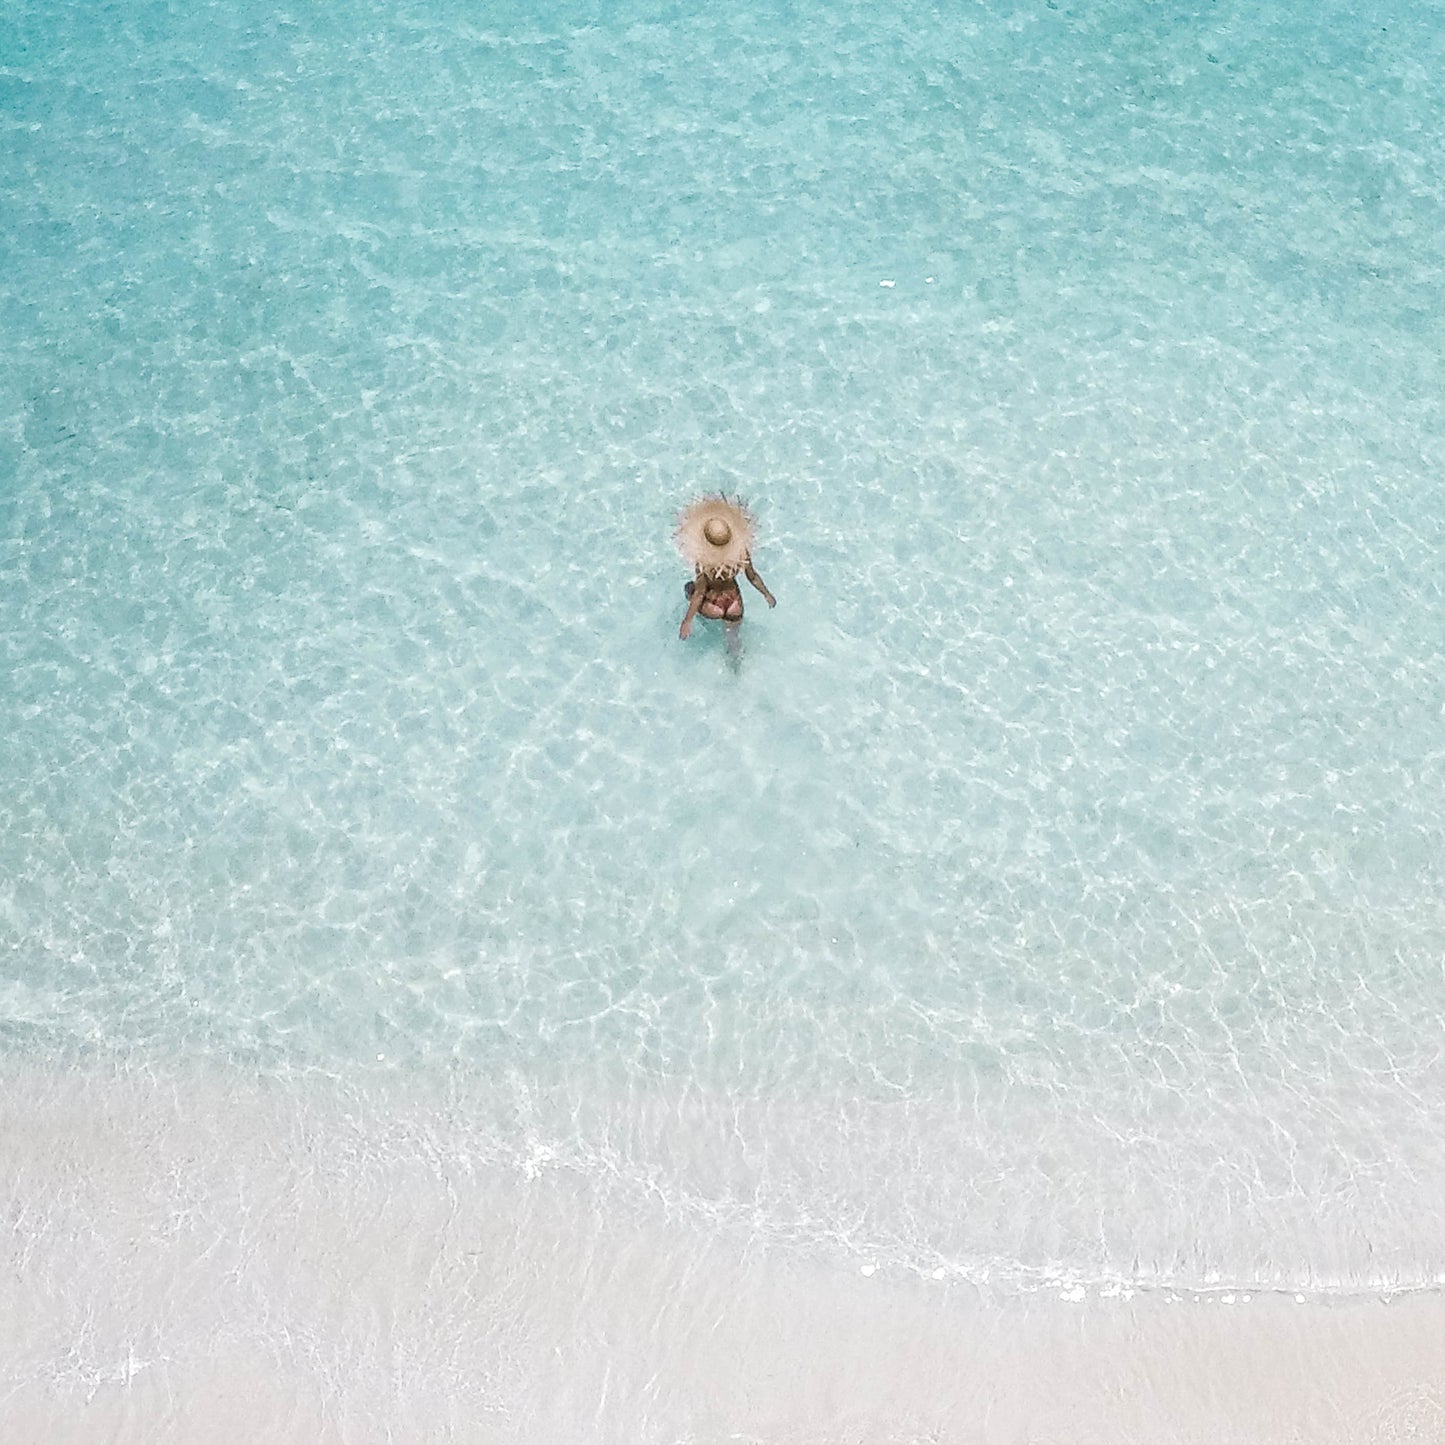 Paradise found in Exuma, Bahamas